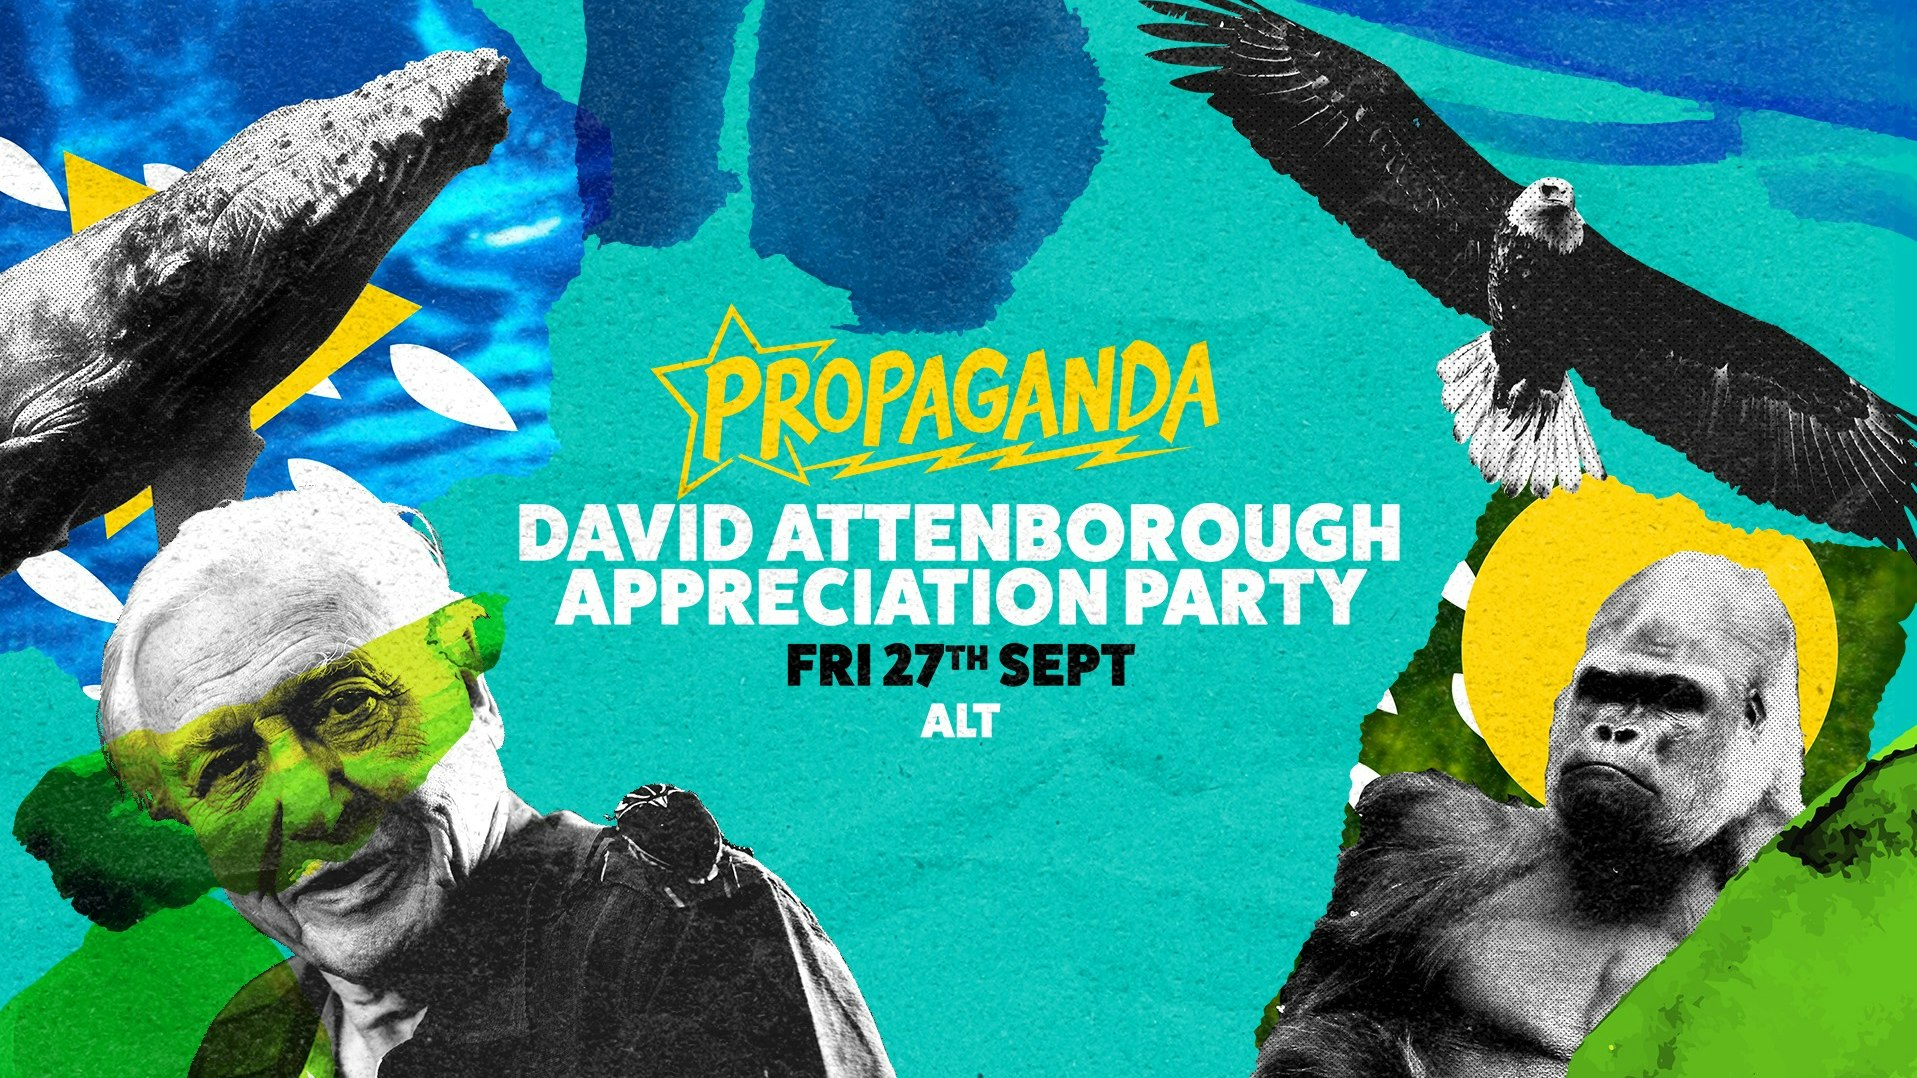 Propaganda Bournemouth – David Attenborough Appreciation Party!